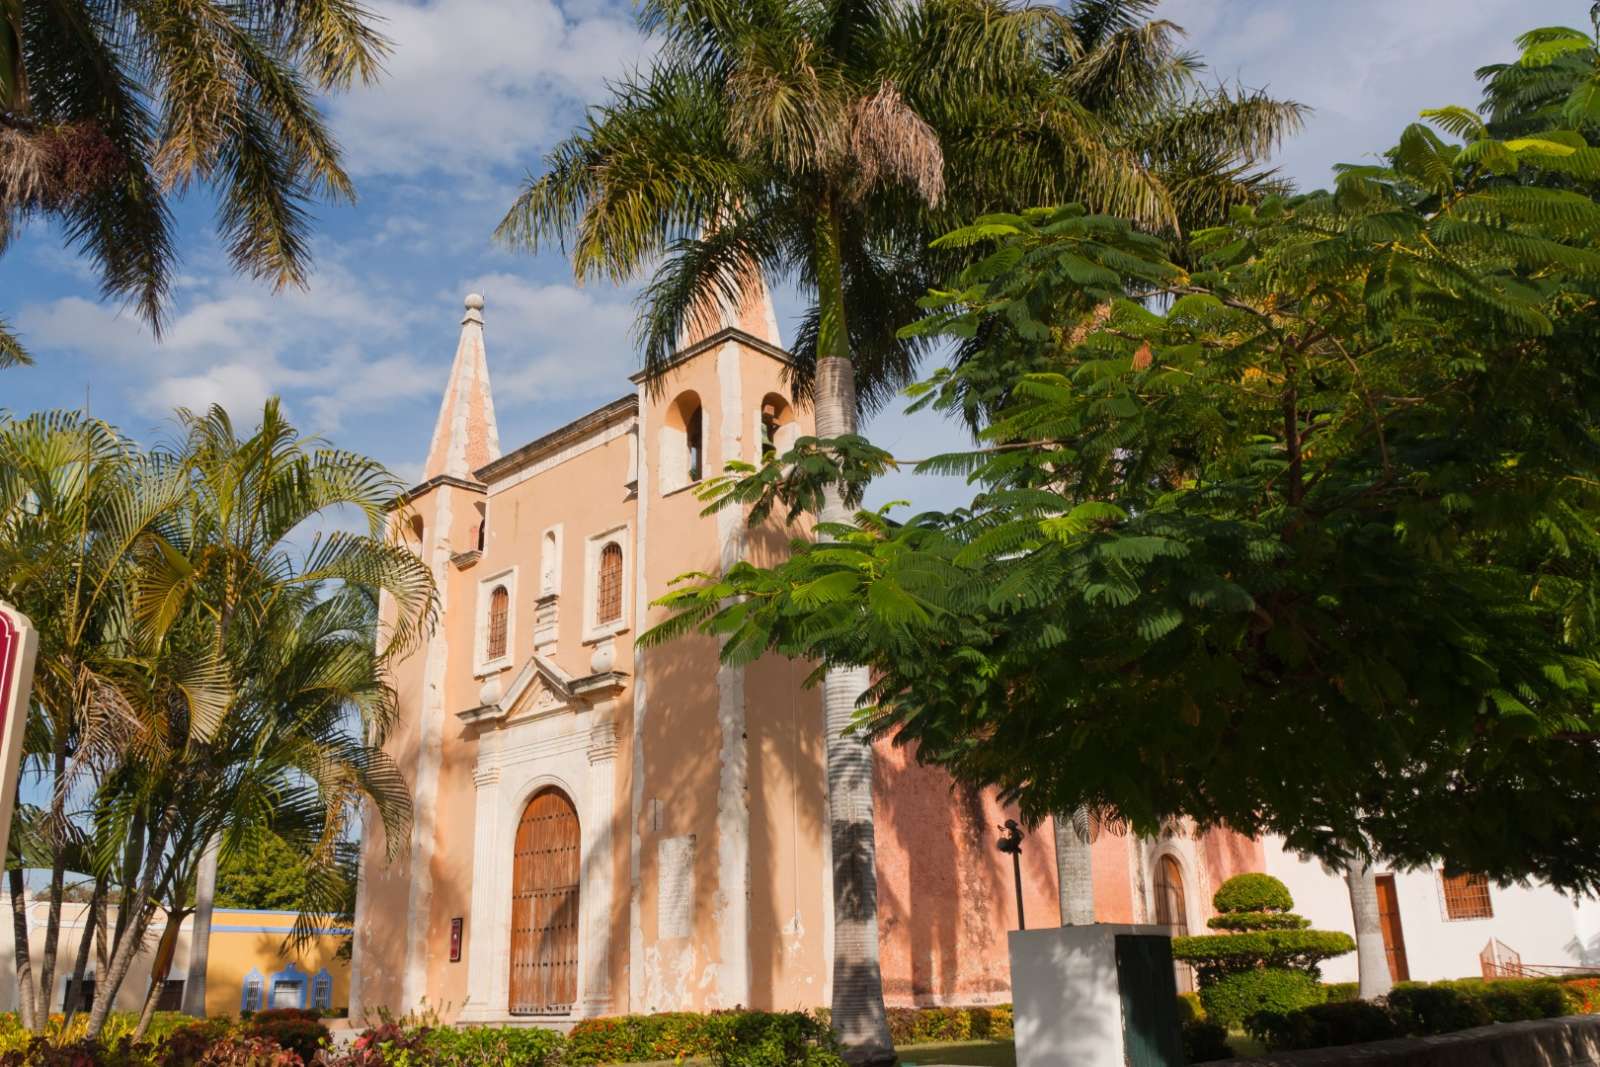 Santa Ana in Merida, Yucatan